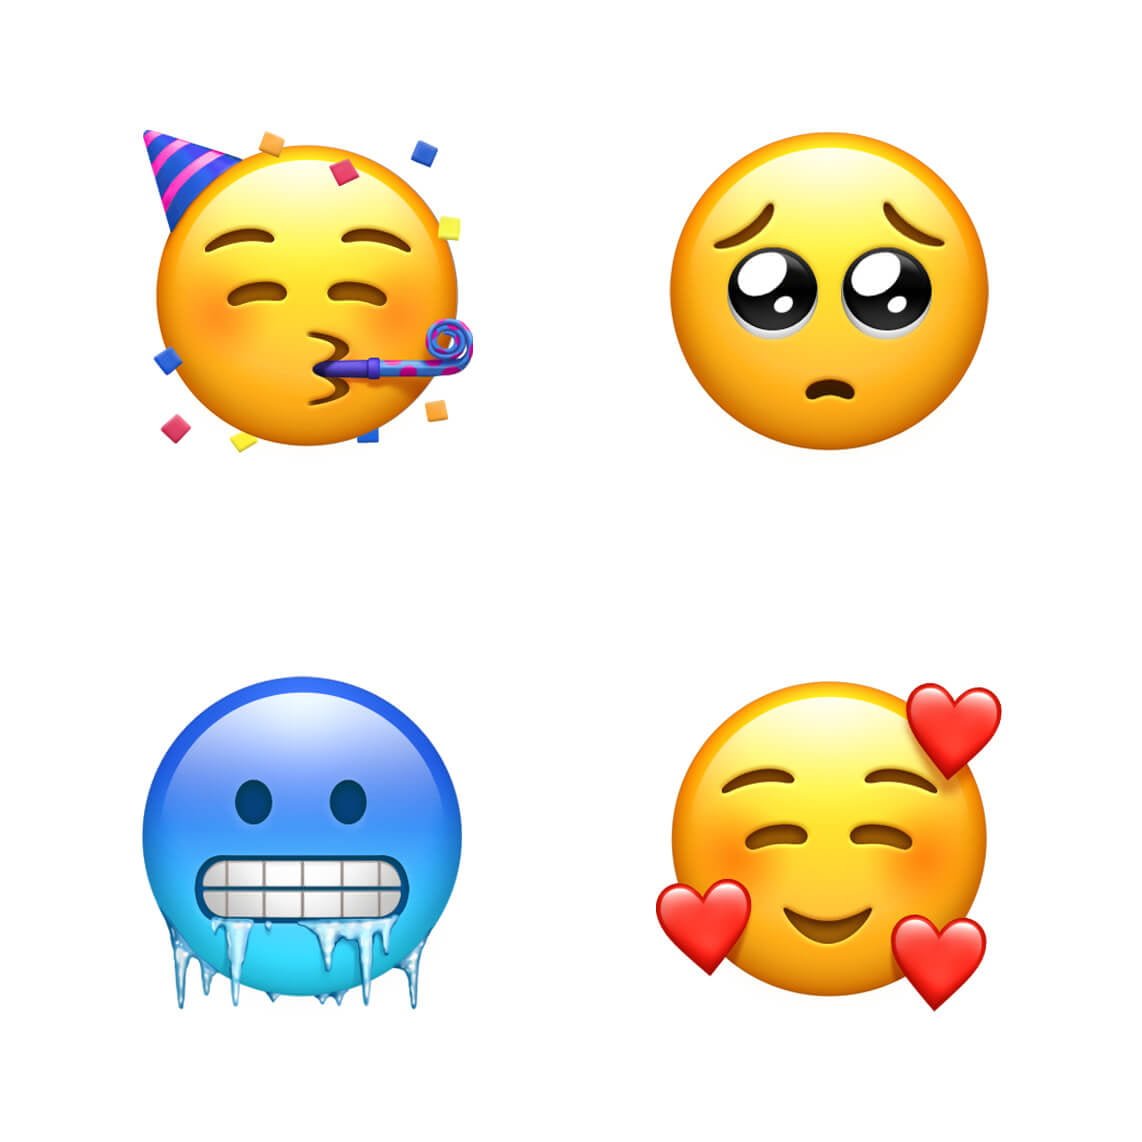 Apple Celebrates World Emoji Day and Adding 70 New Emojis